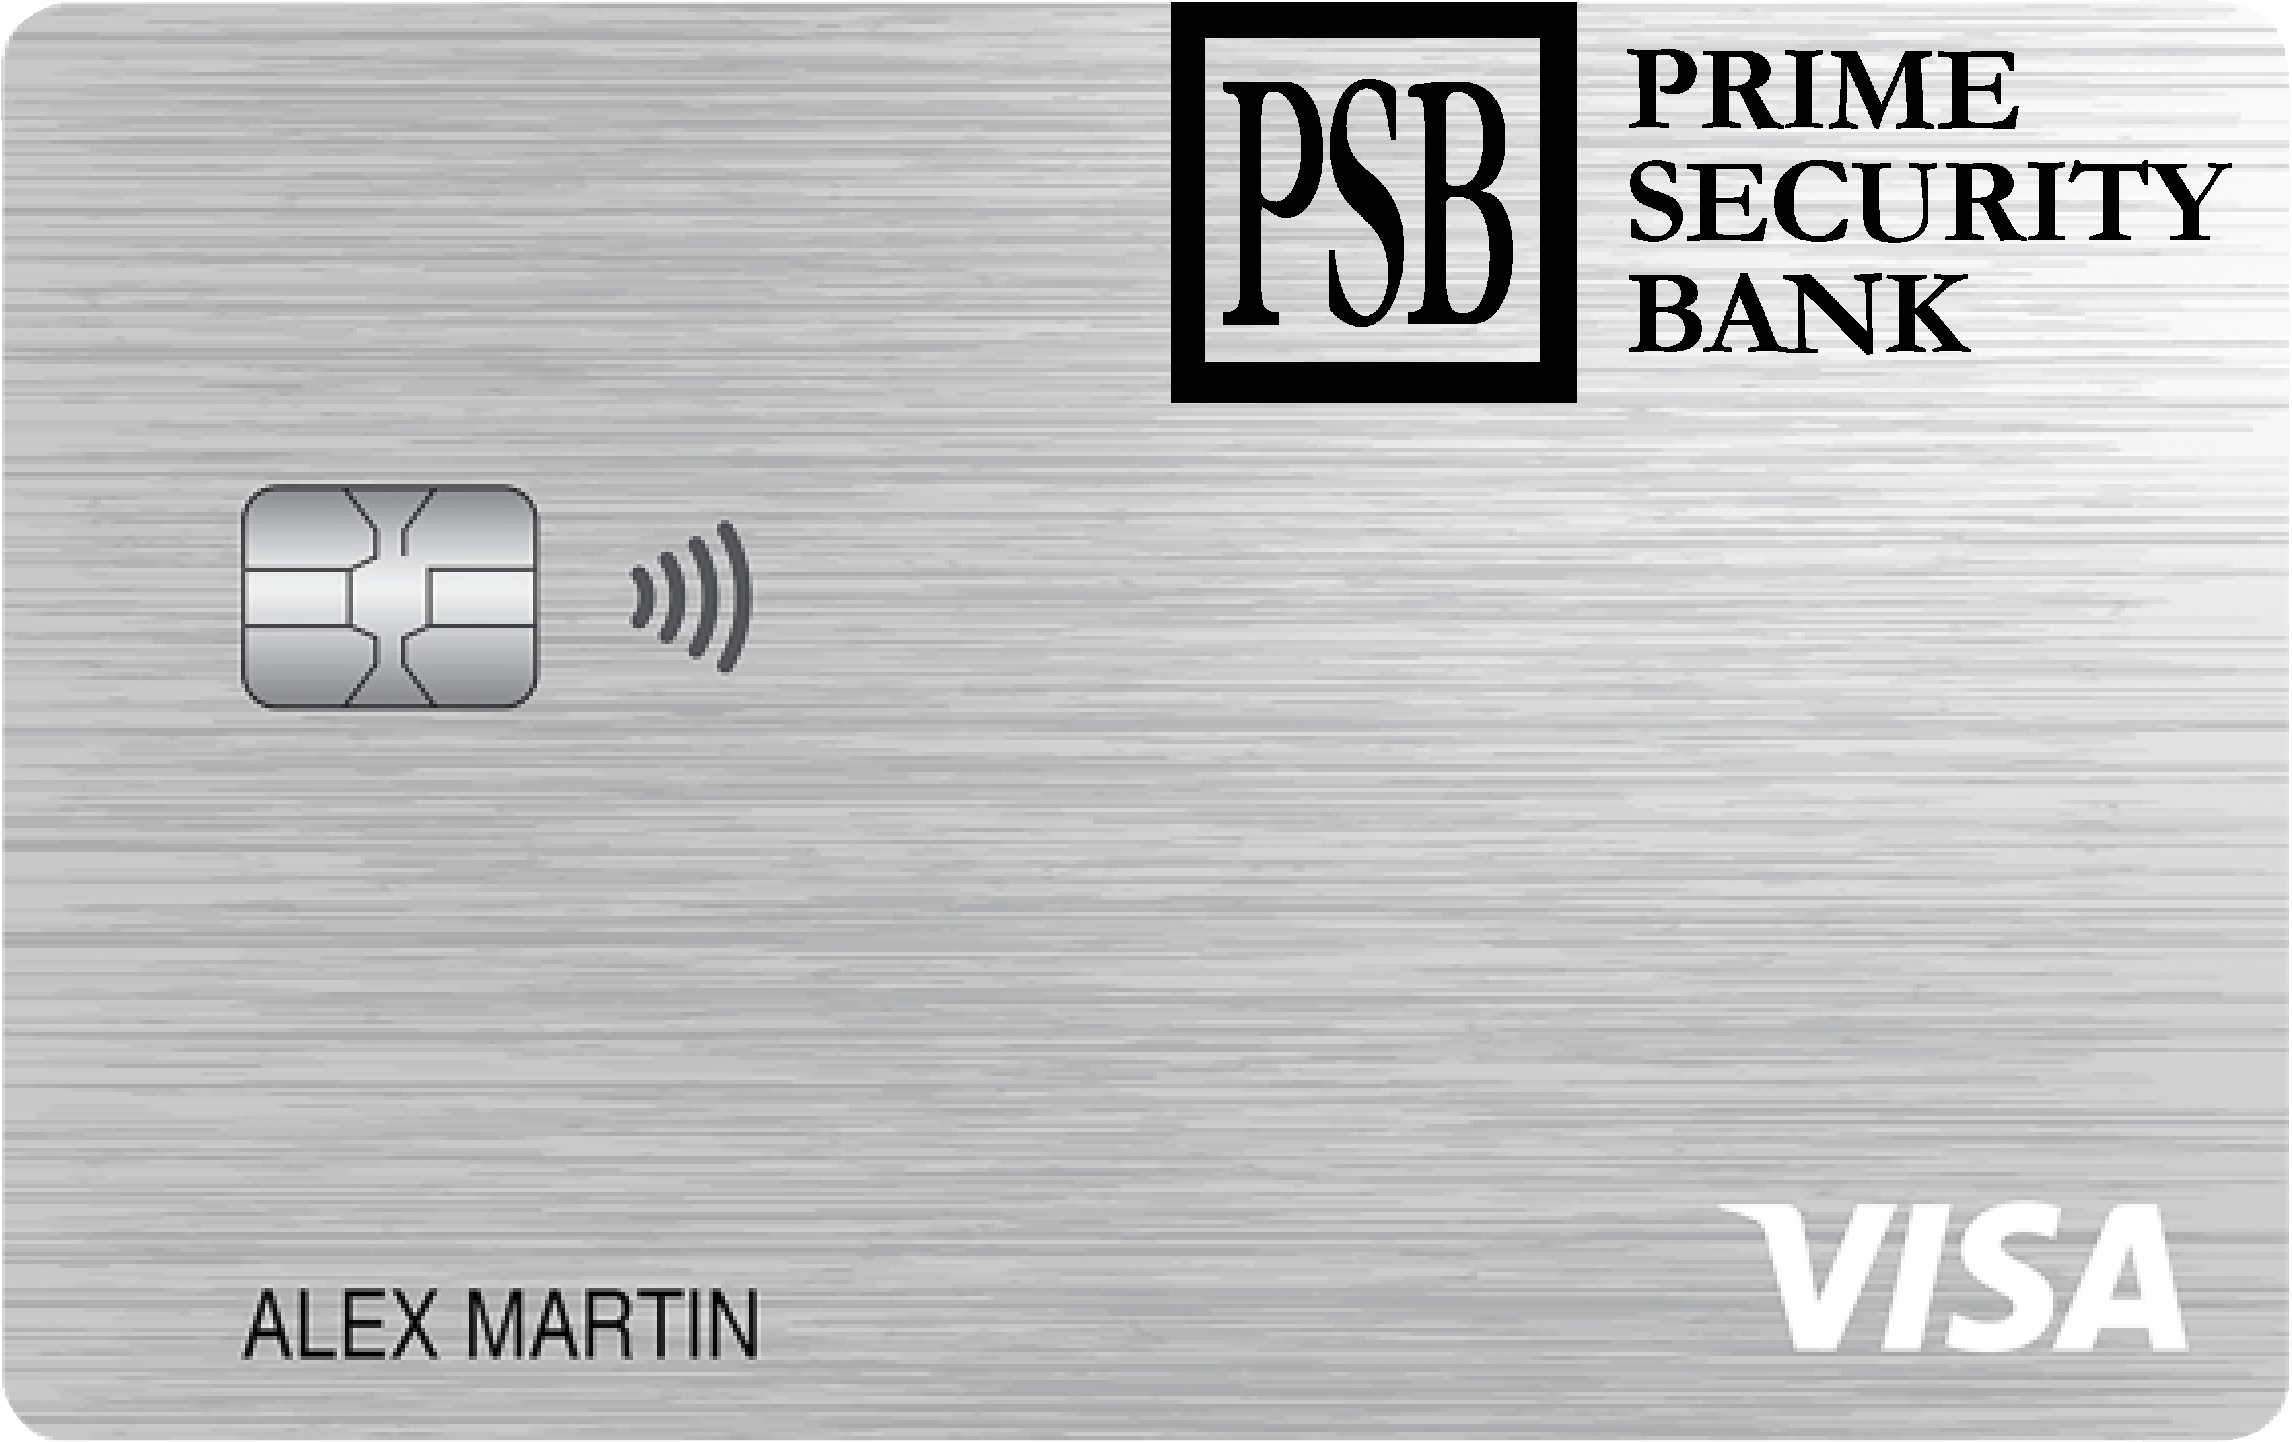 PRIME SECURITY BANK Secured Card